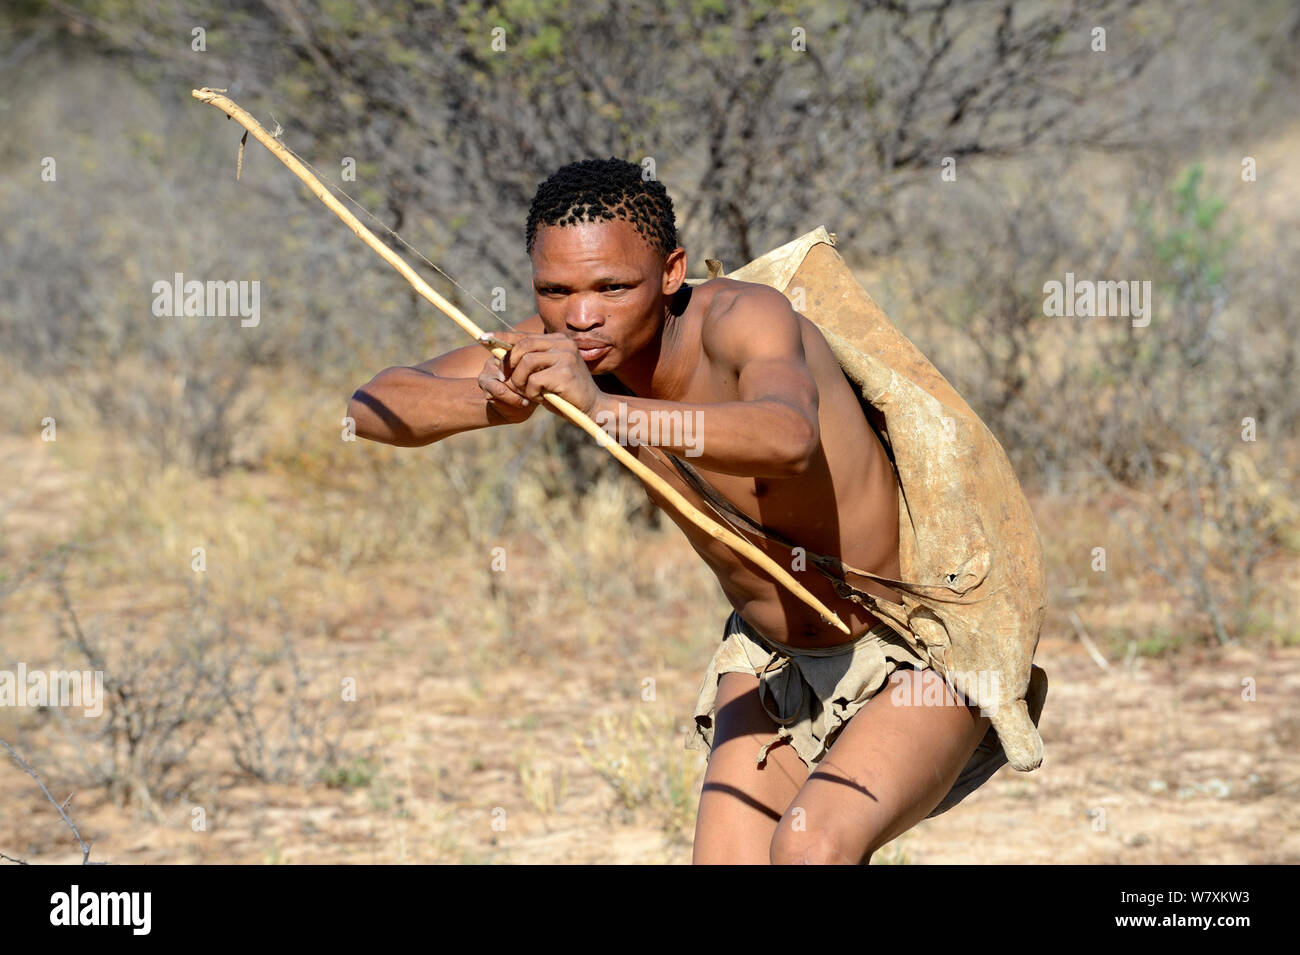 Naro San Bushman hunting in the bush with traditional bow and arrow, Kalahari, Ghanzi region, Botswana, Africa. Dry season, October 2014. Stock Photo